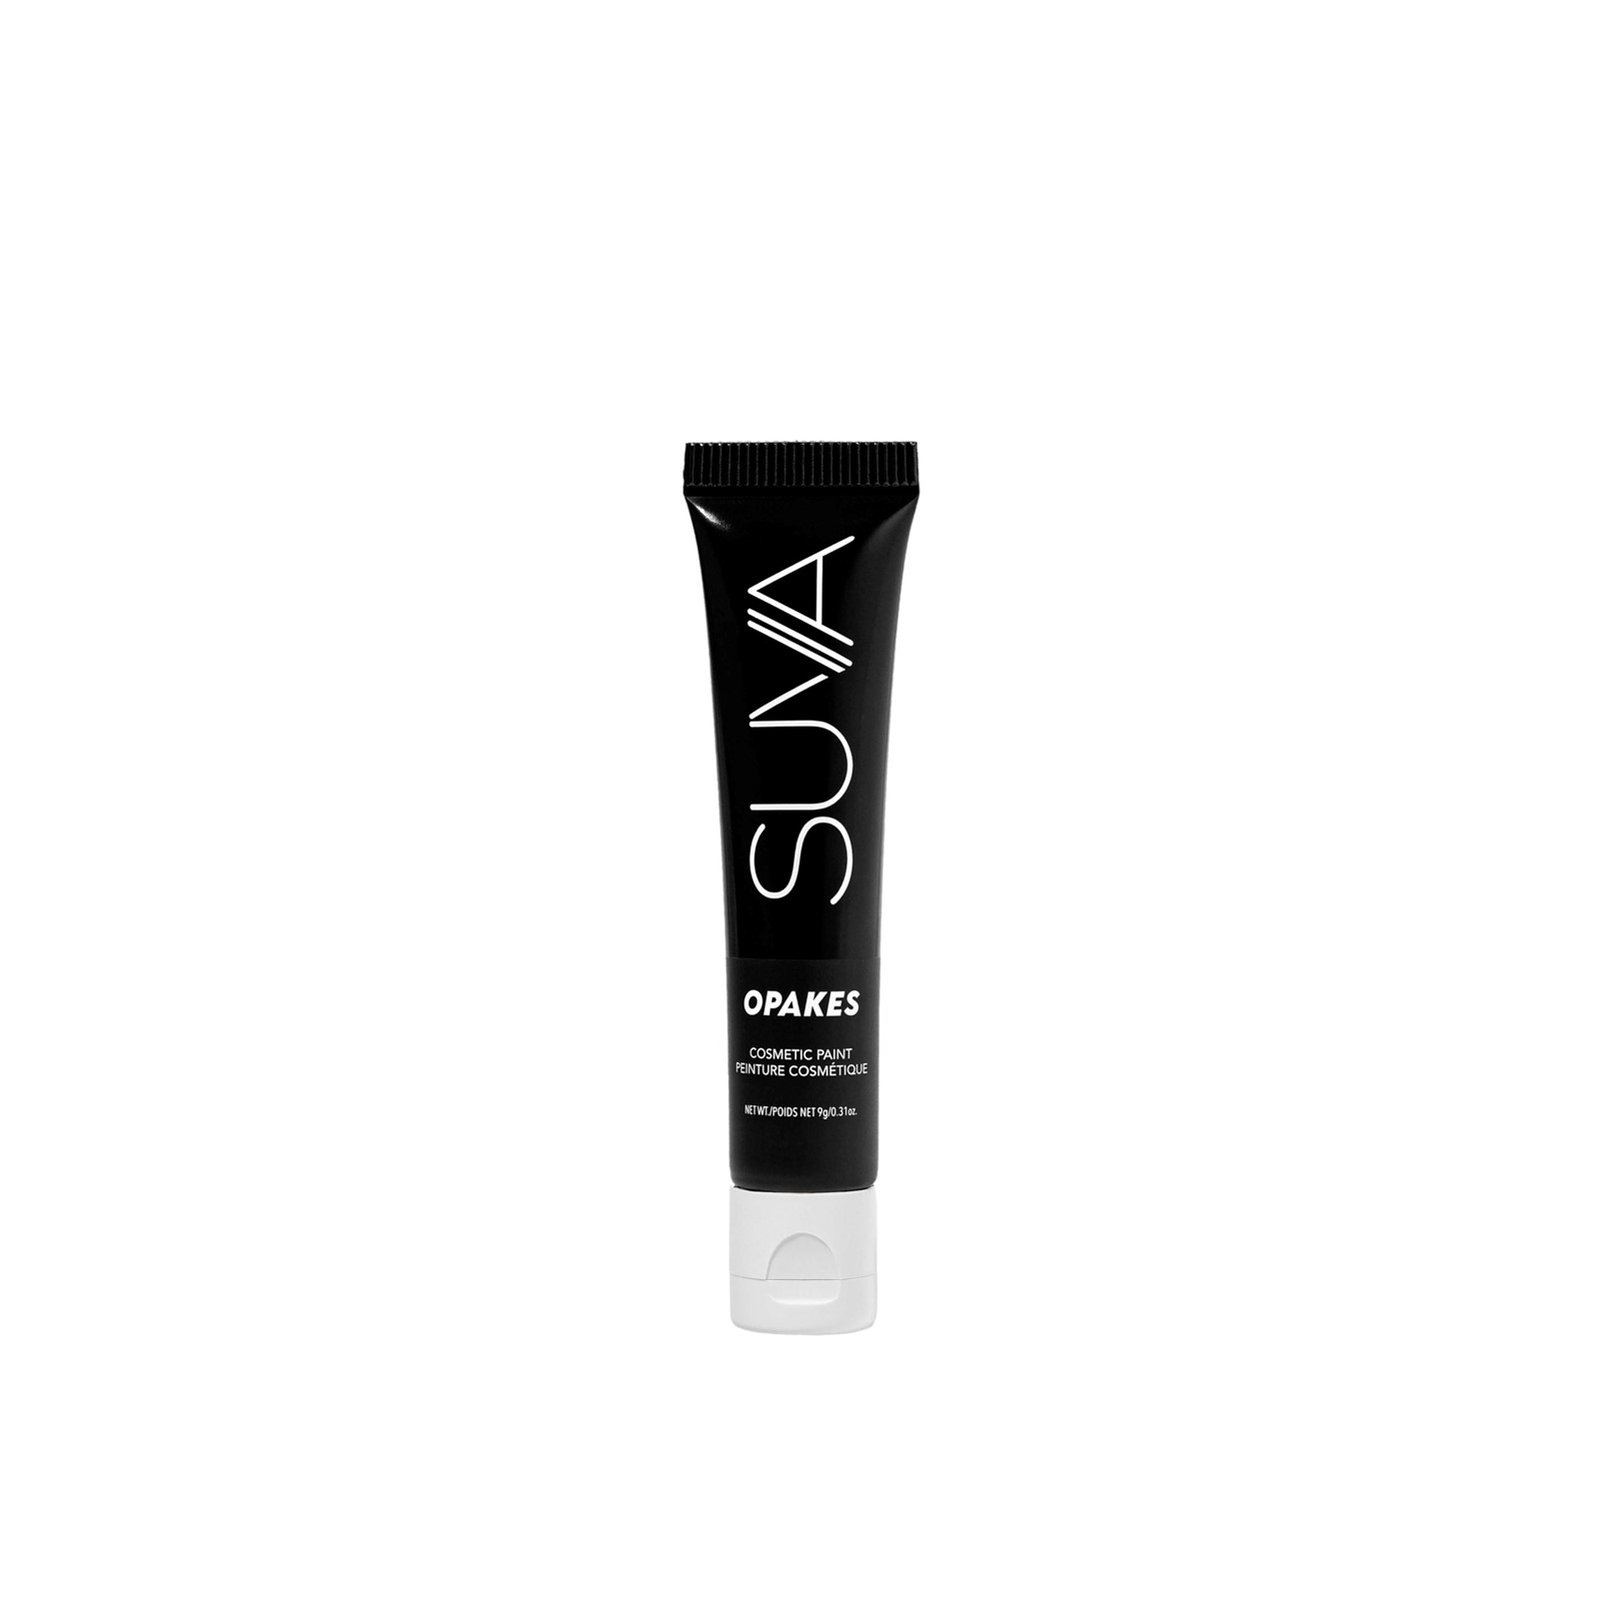 SUVA Beauty Opakes Cosmetic Paint Bamboozled Black 9g